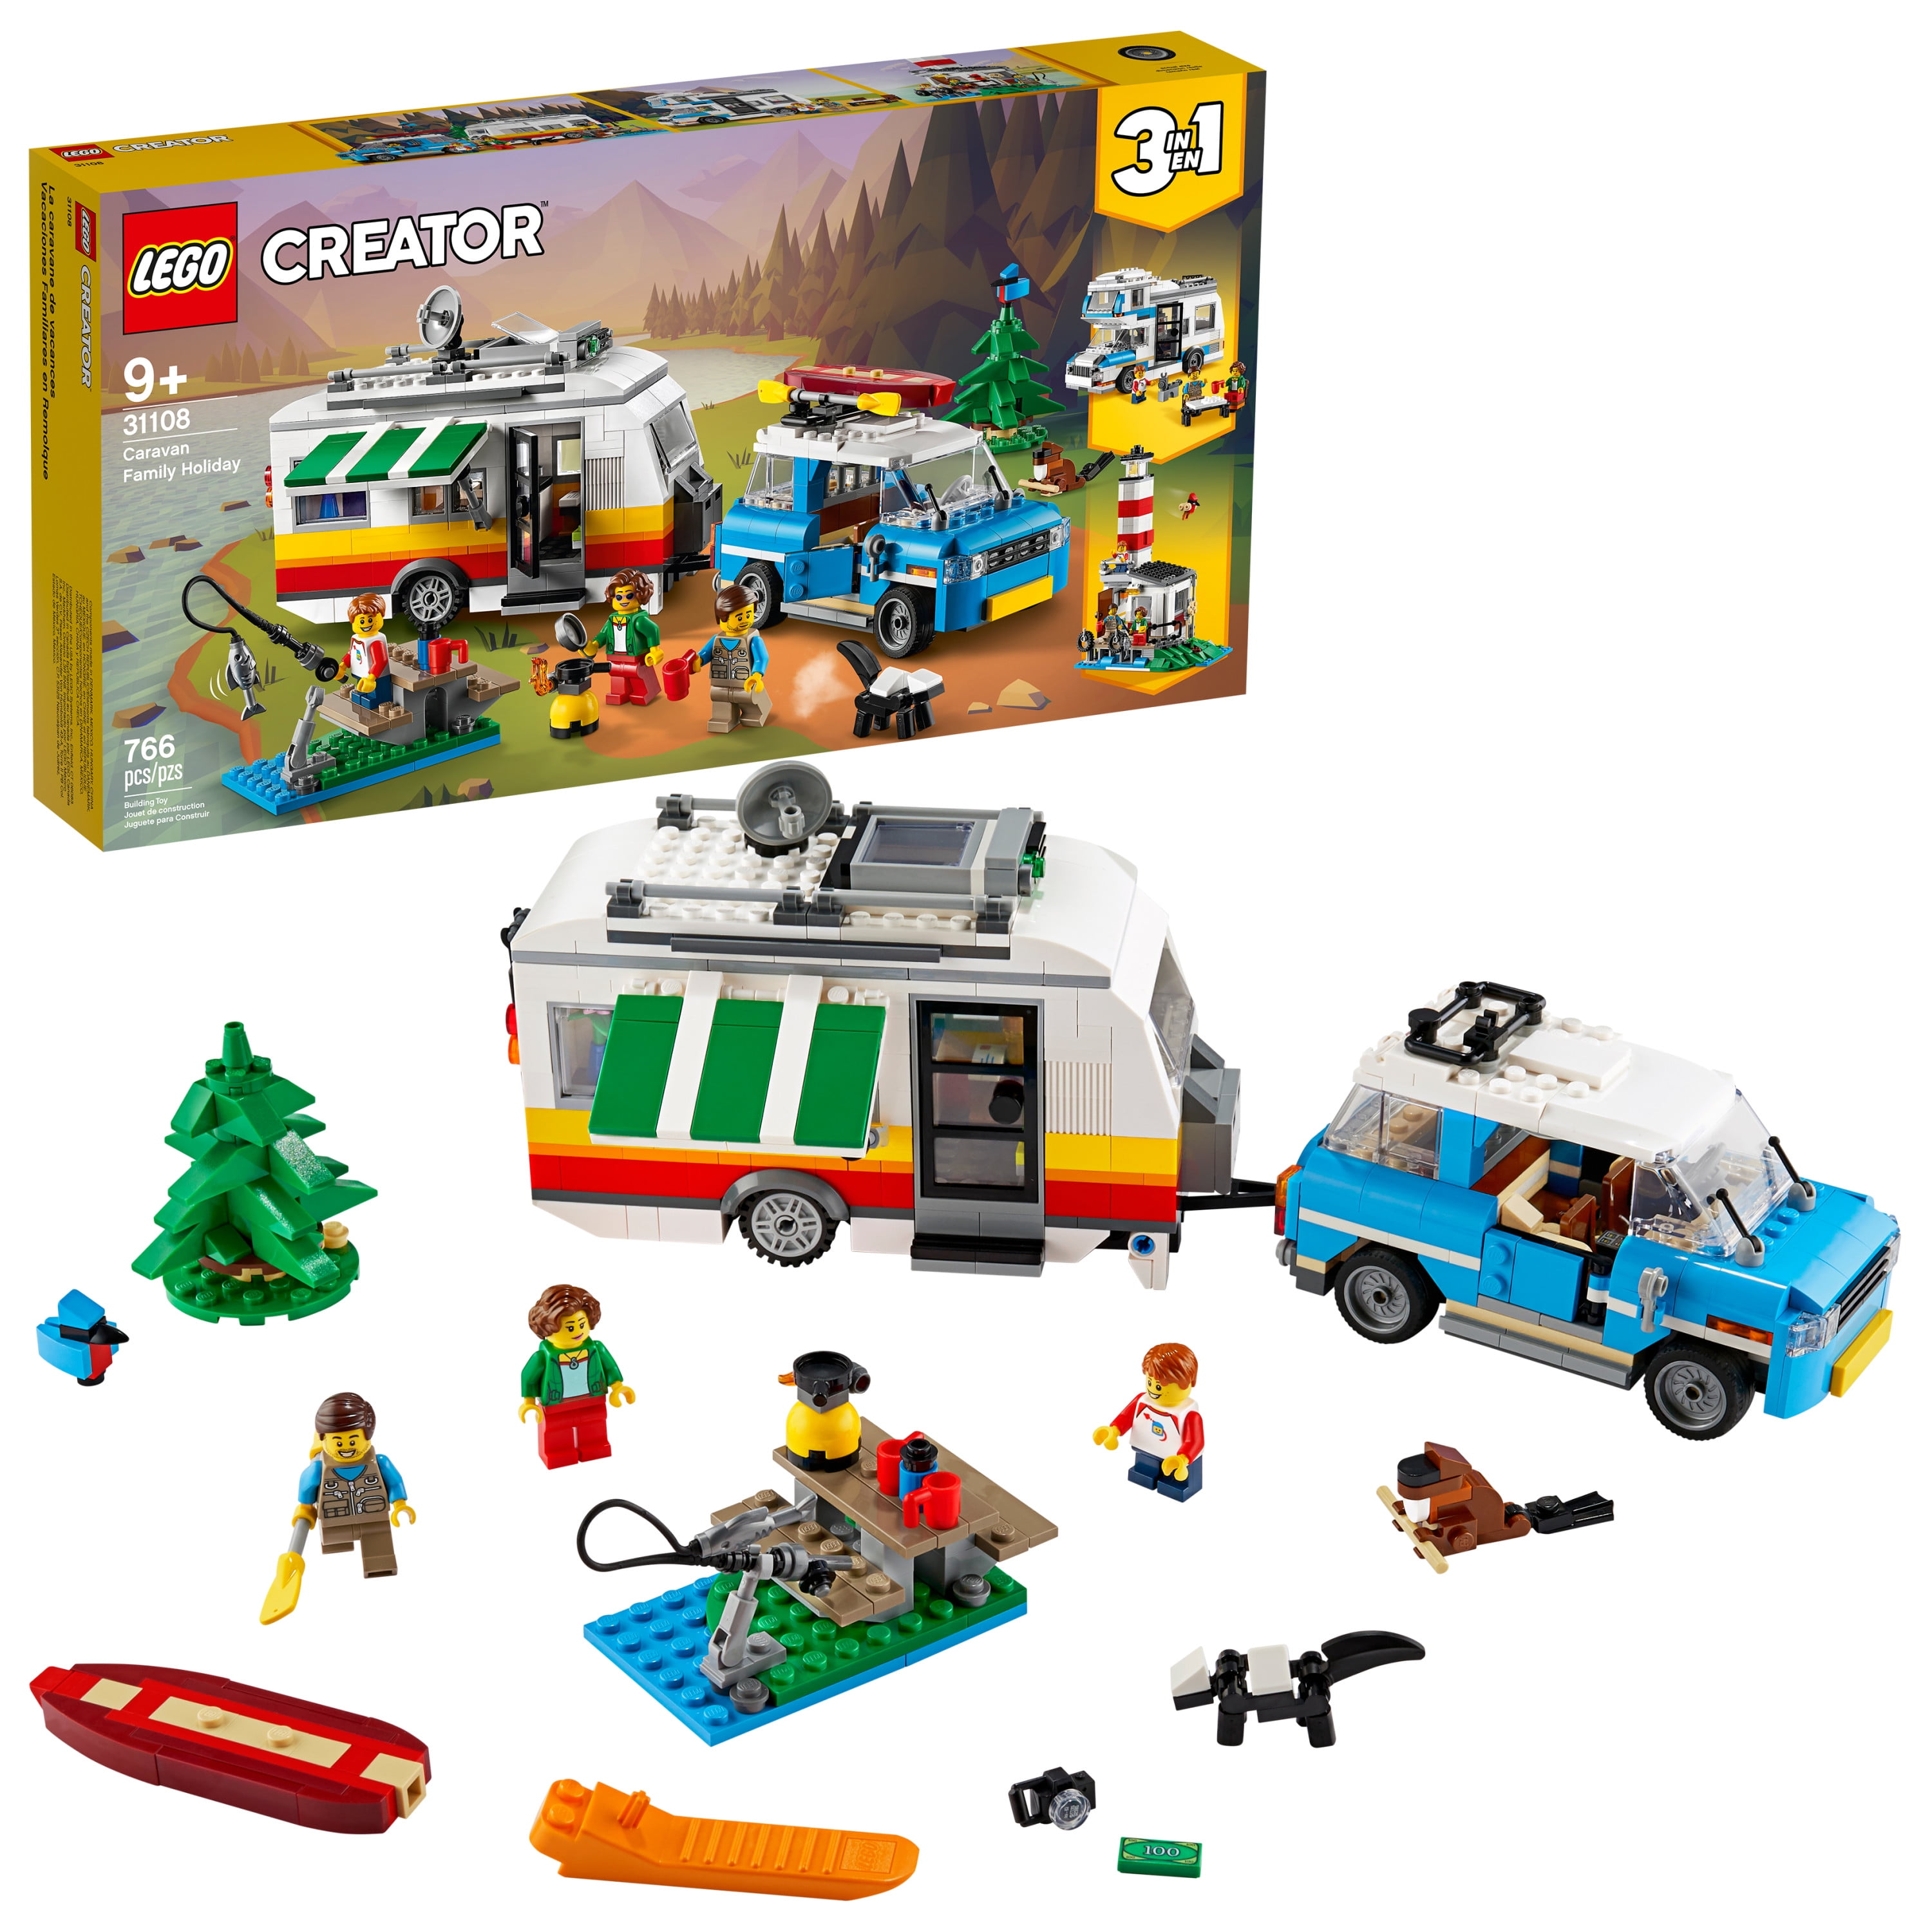 Lego 31108 Creator Caravan Family Holiday Building Set 